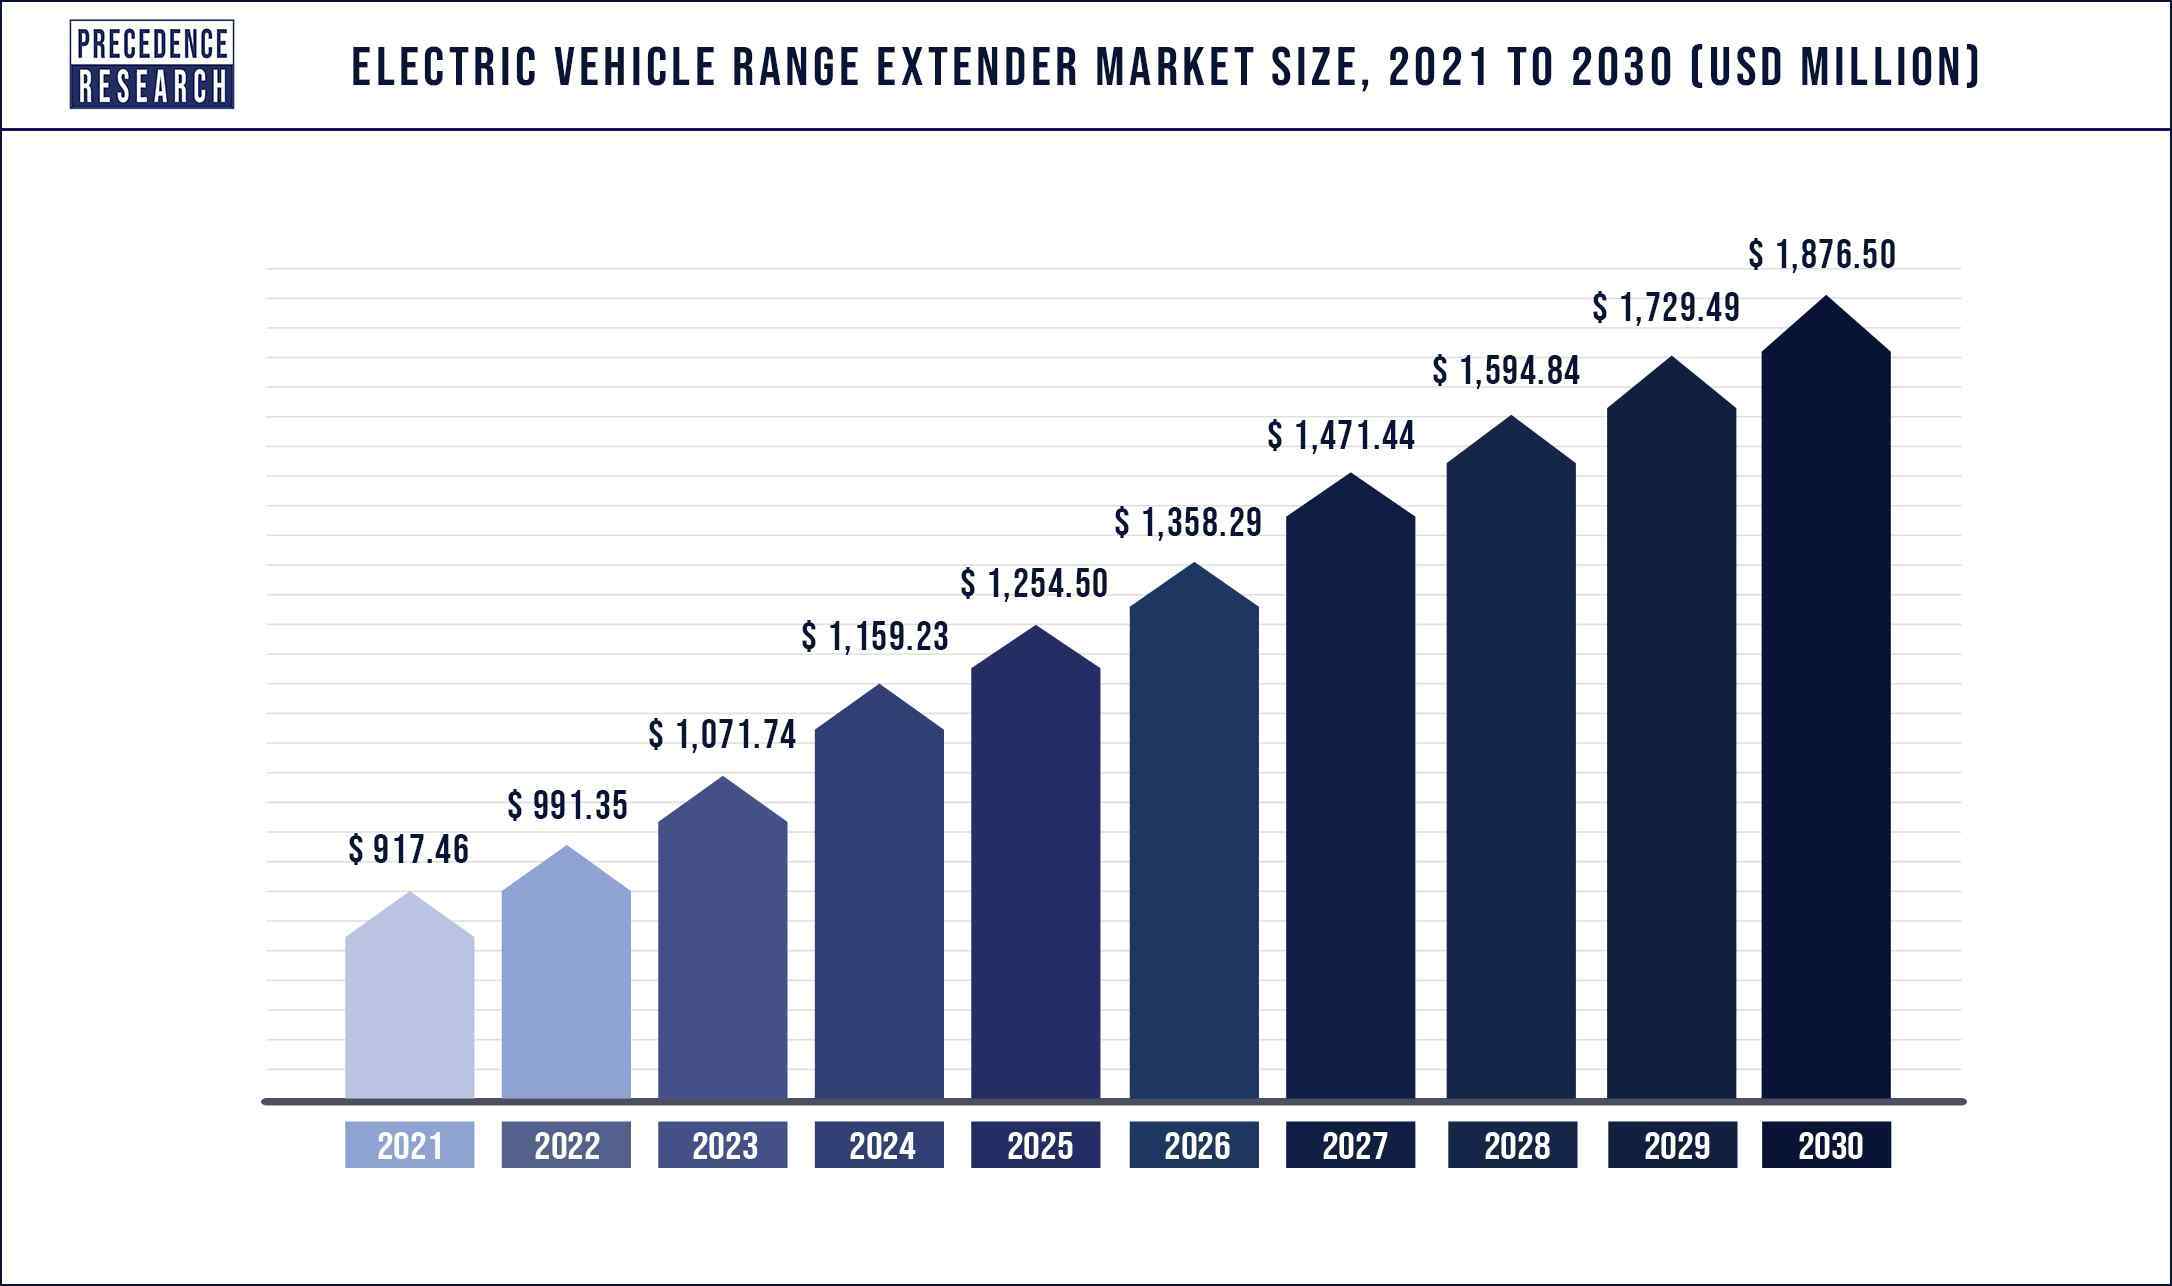 Electric Vehicle Range Extender Market Size 2021 to 2030